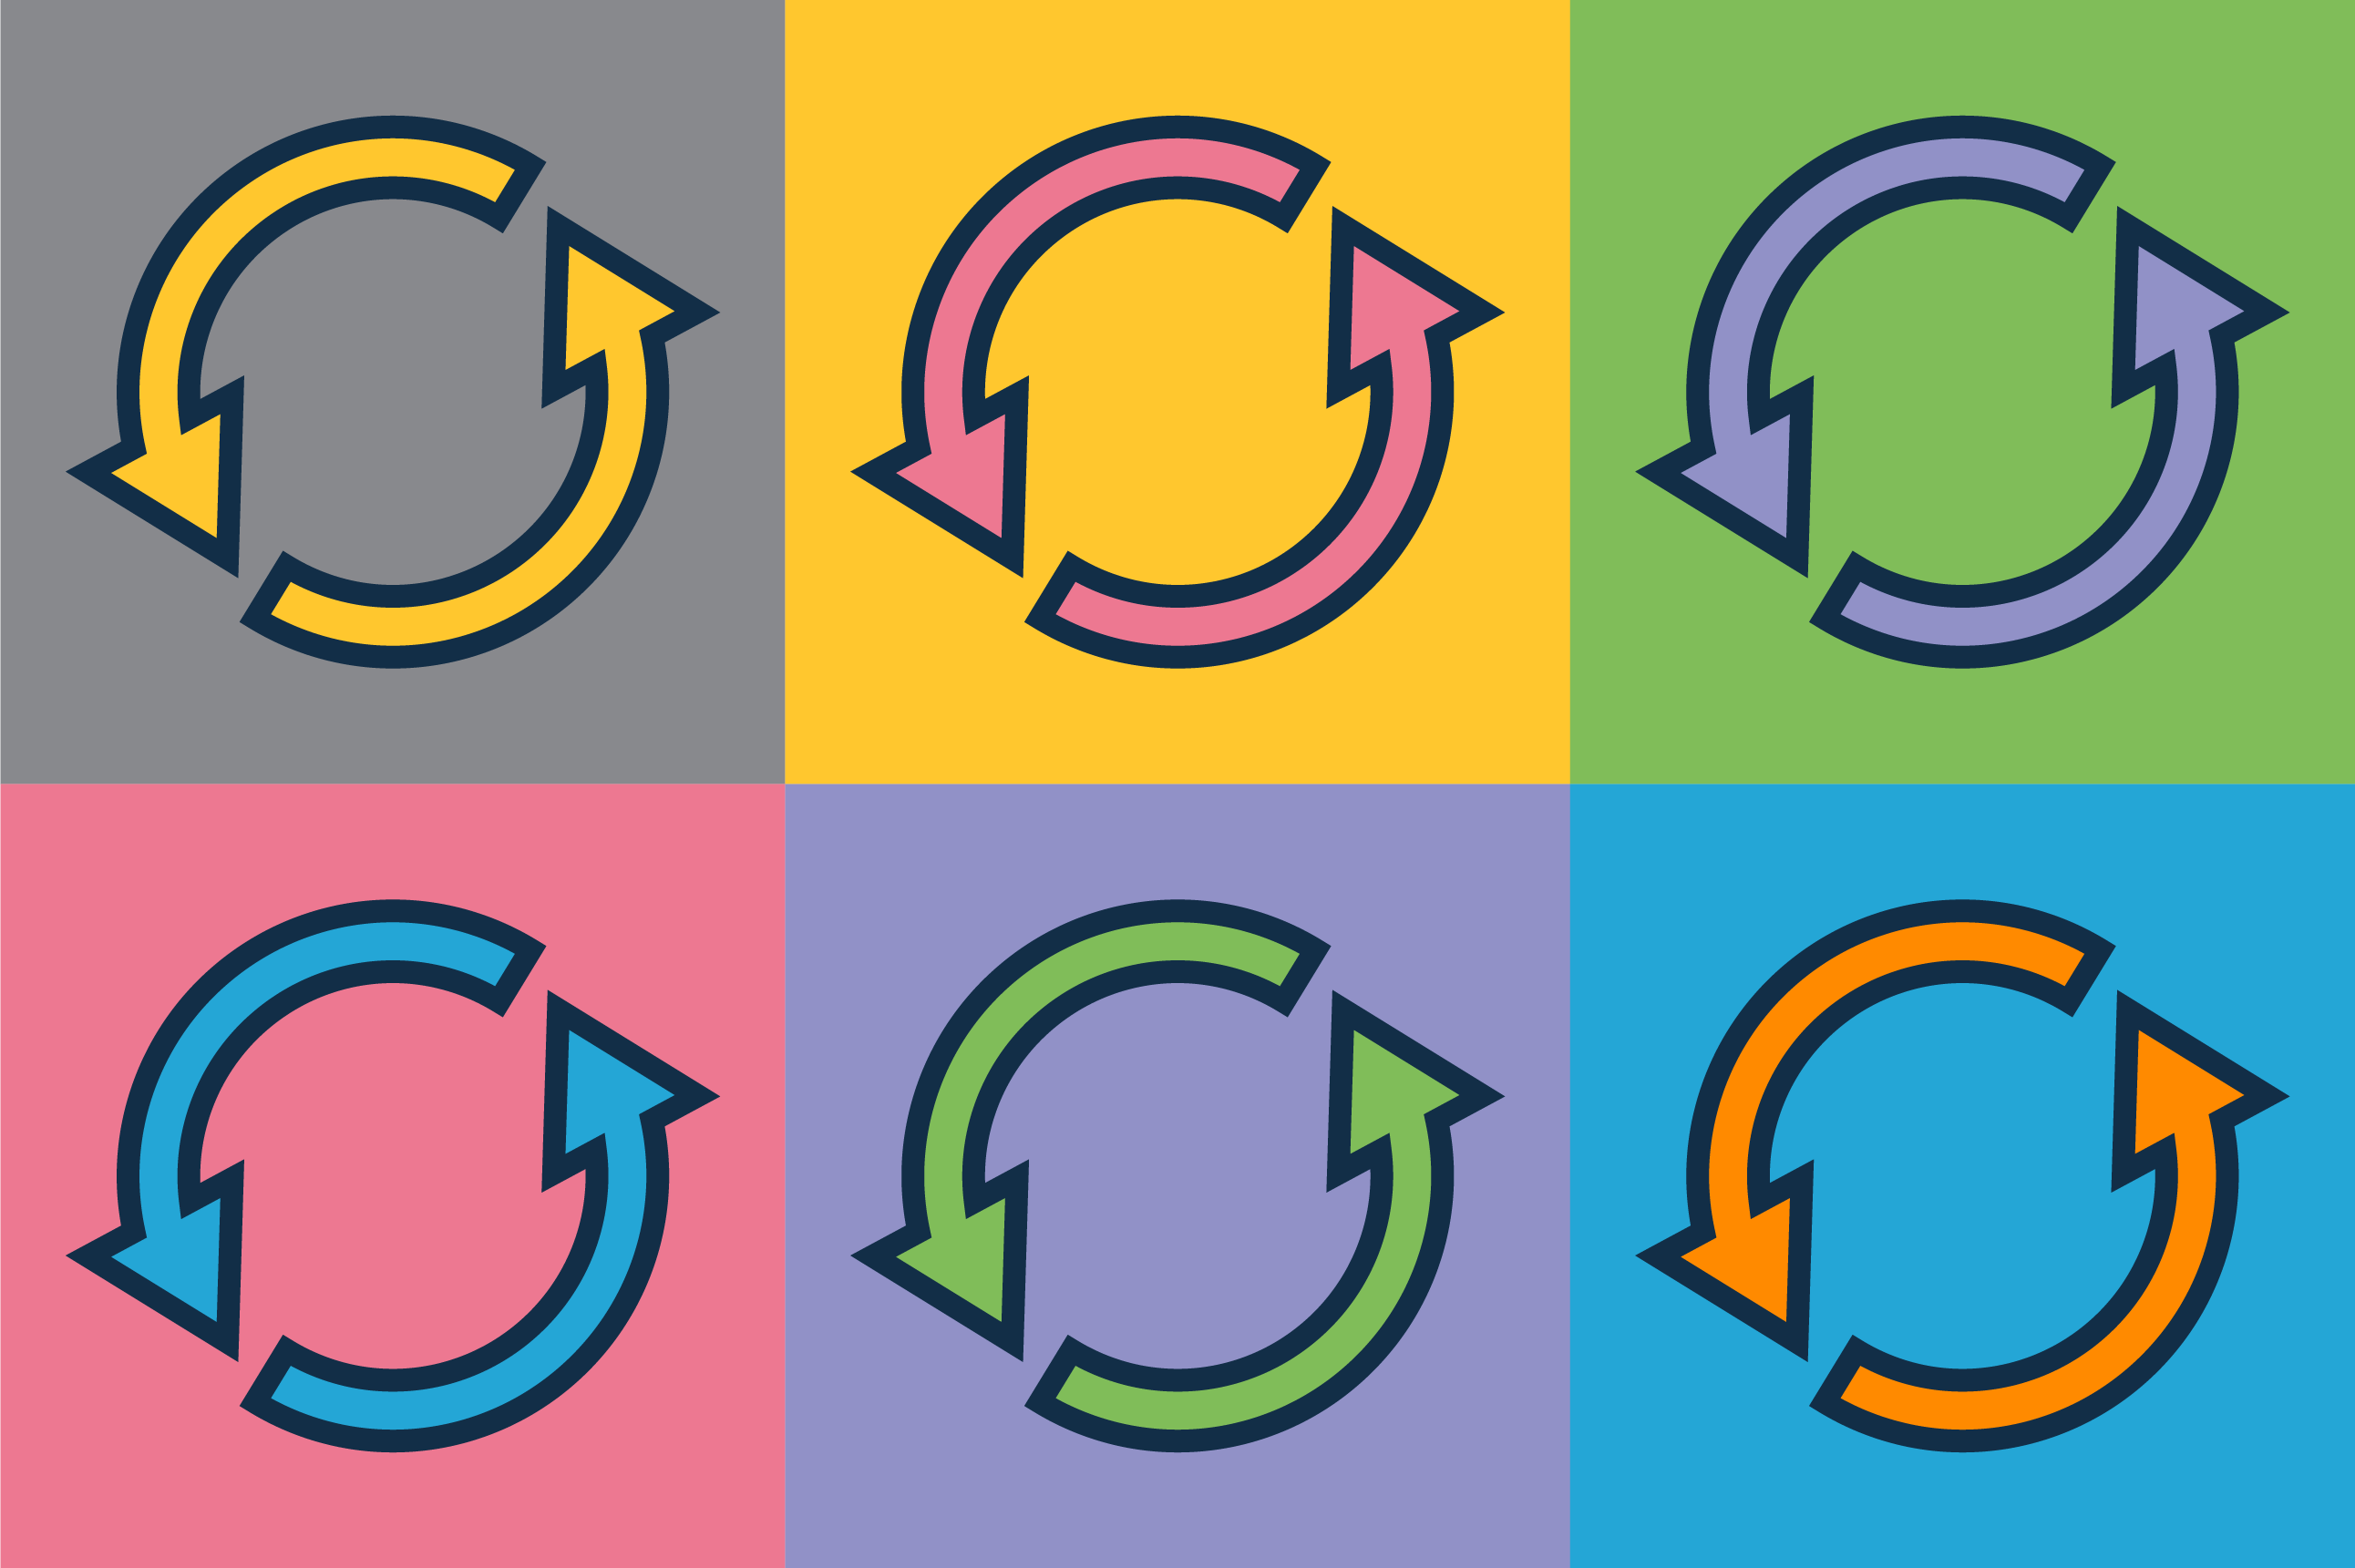 6 multi-coloured arrows forming circular shapes